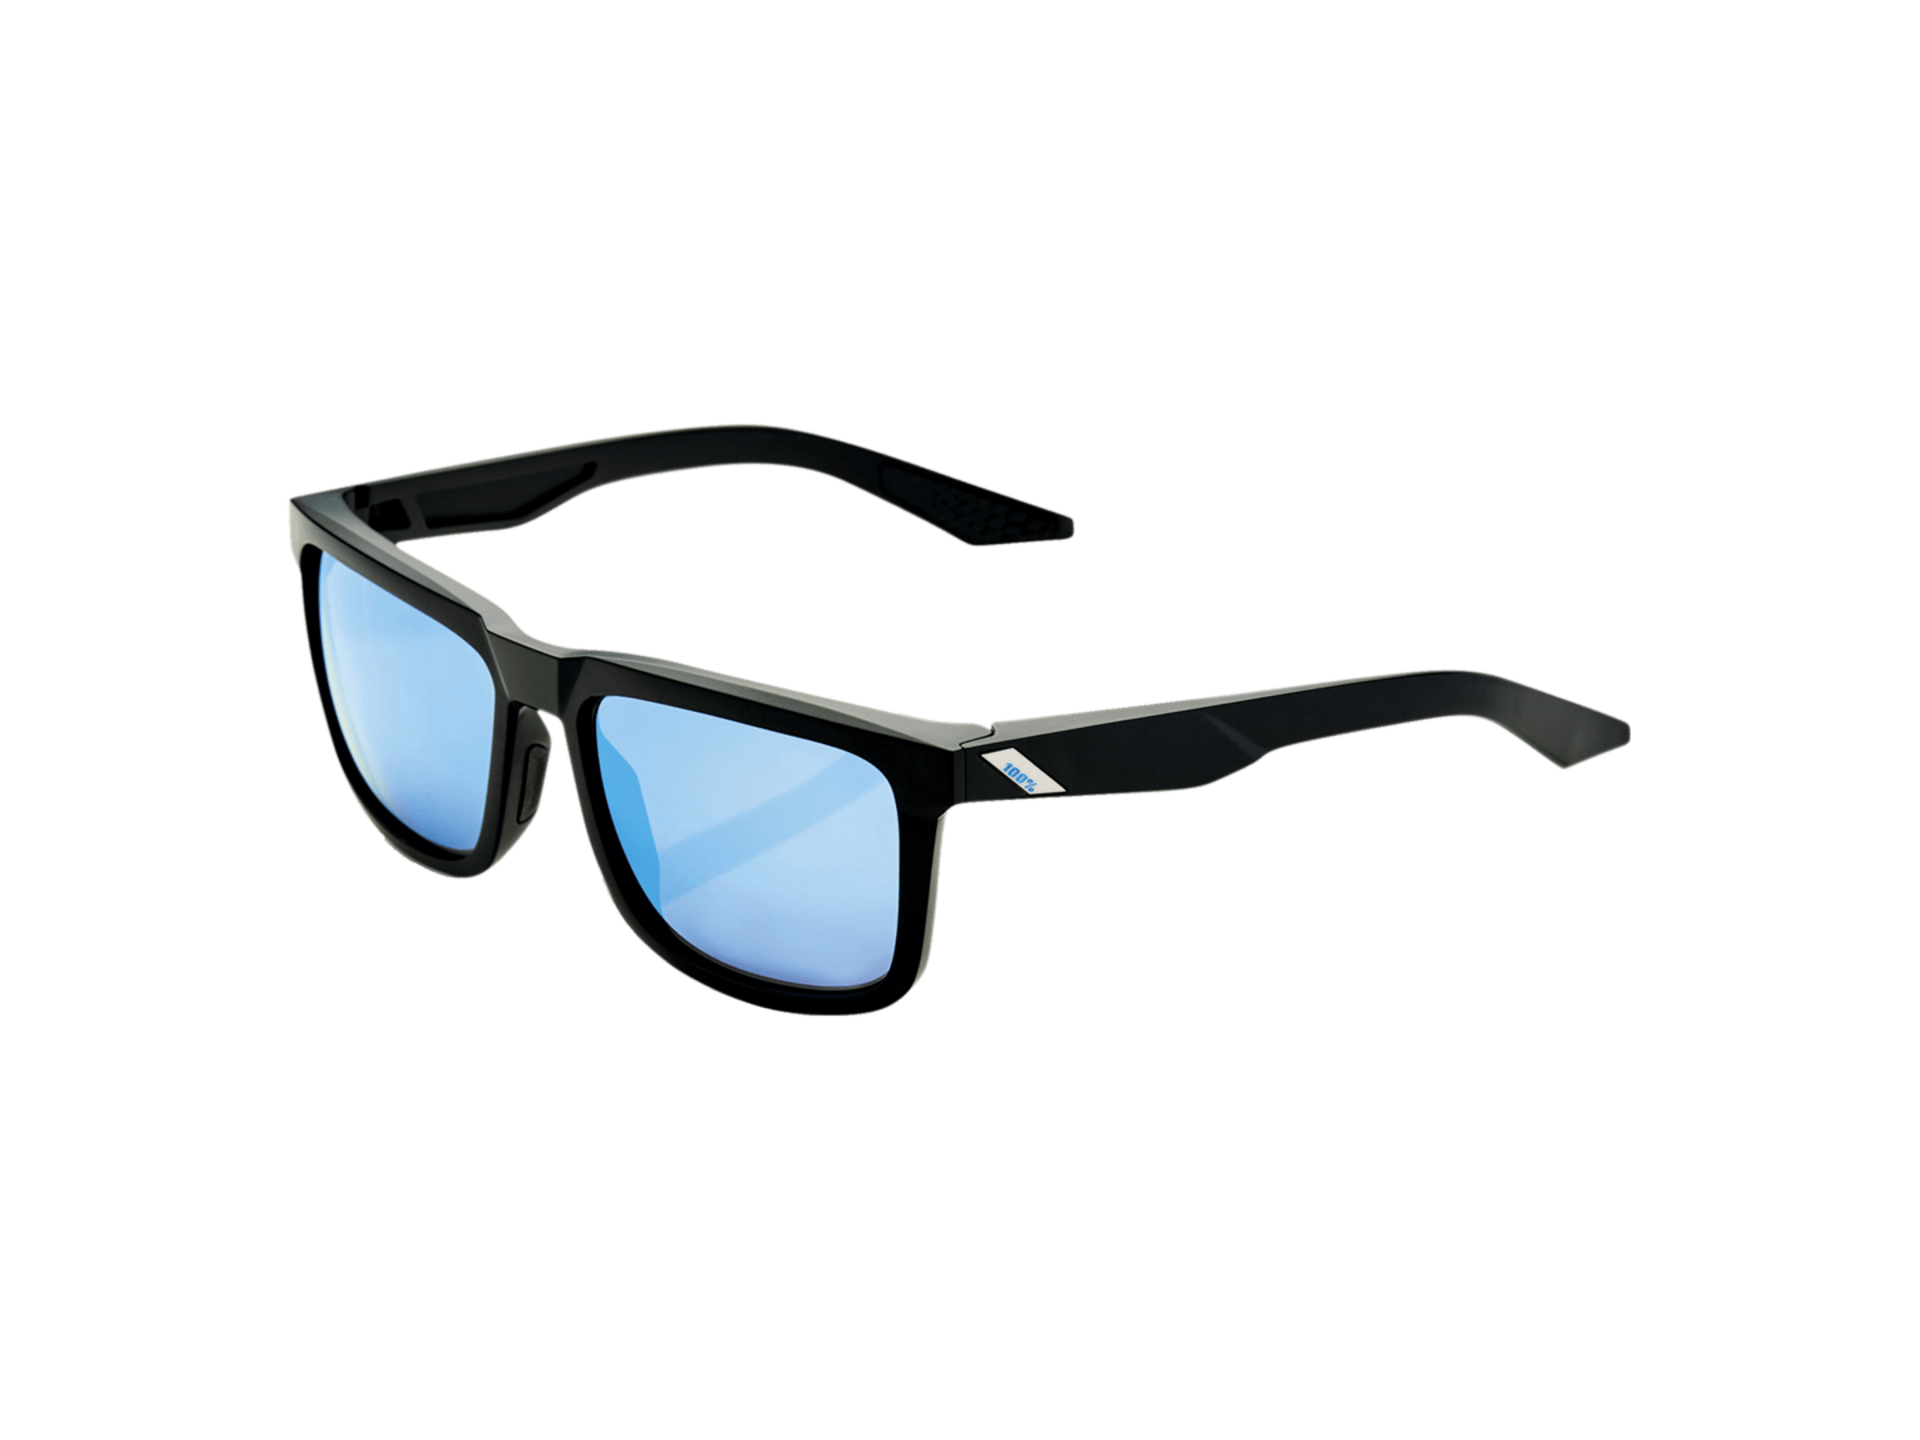 100% Blake HiPER Lens Sunglasses